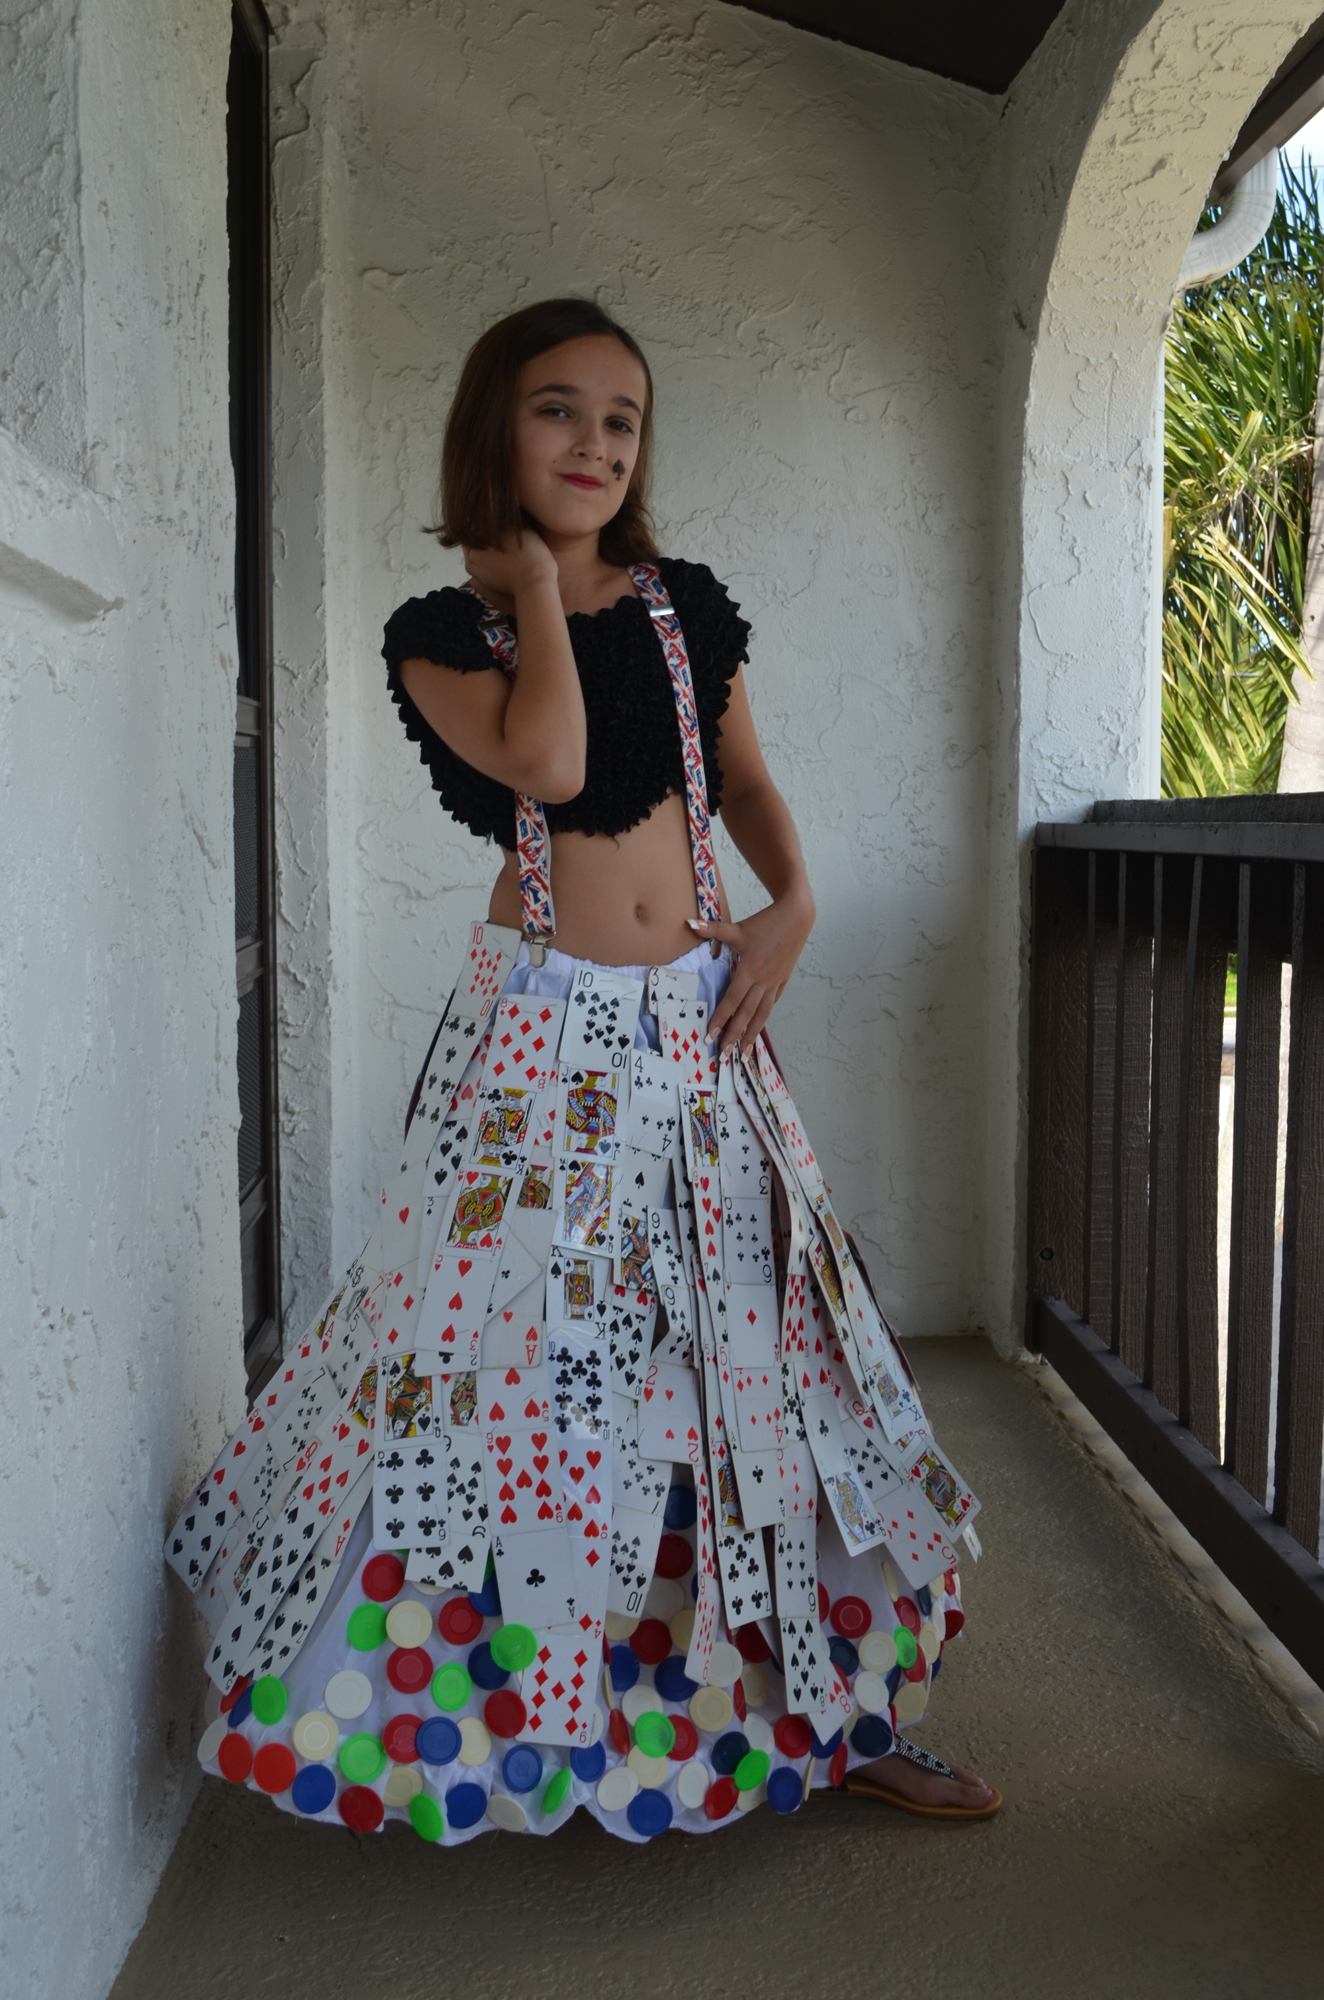 Sophia Cusumano, 10, models her poker-inspired dress at the iconcept jr. photoshoot. Photo by Niki Kottmann.